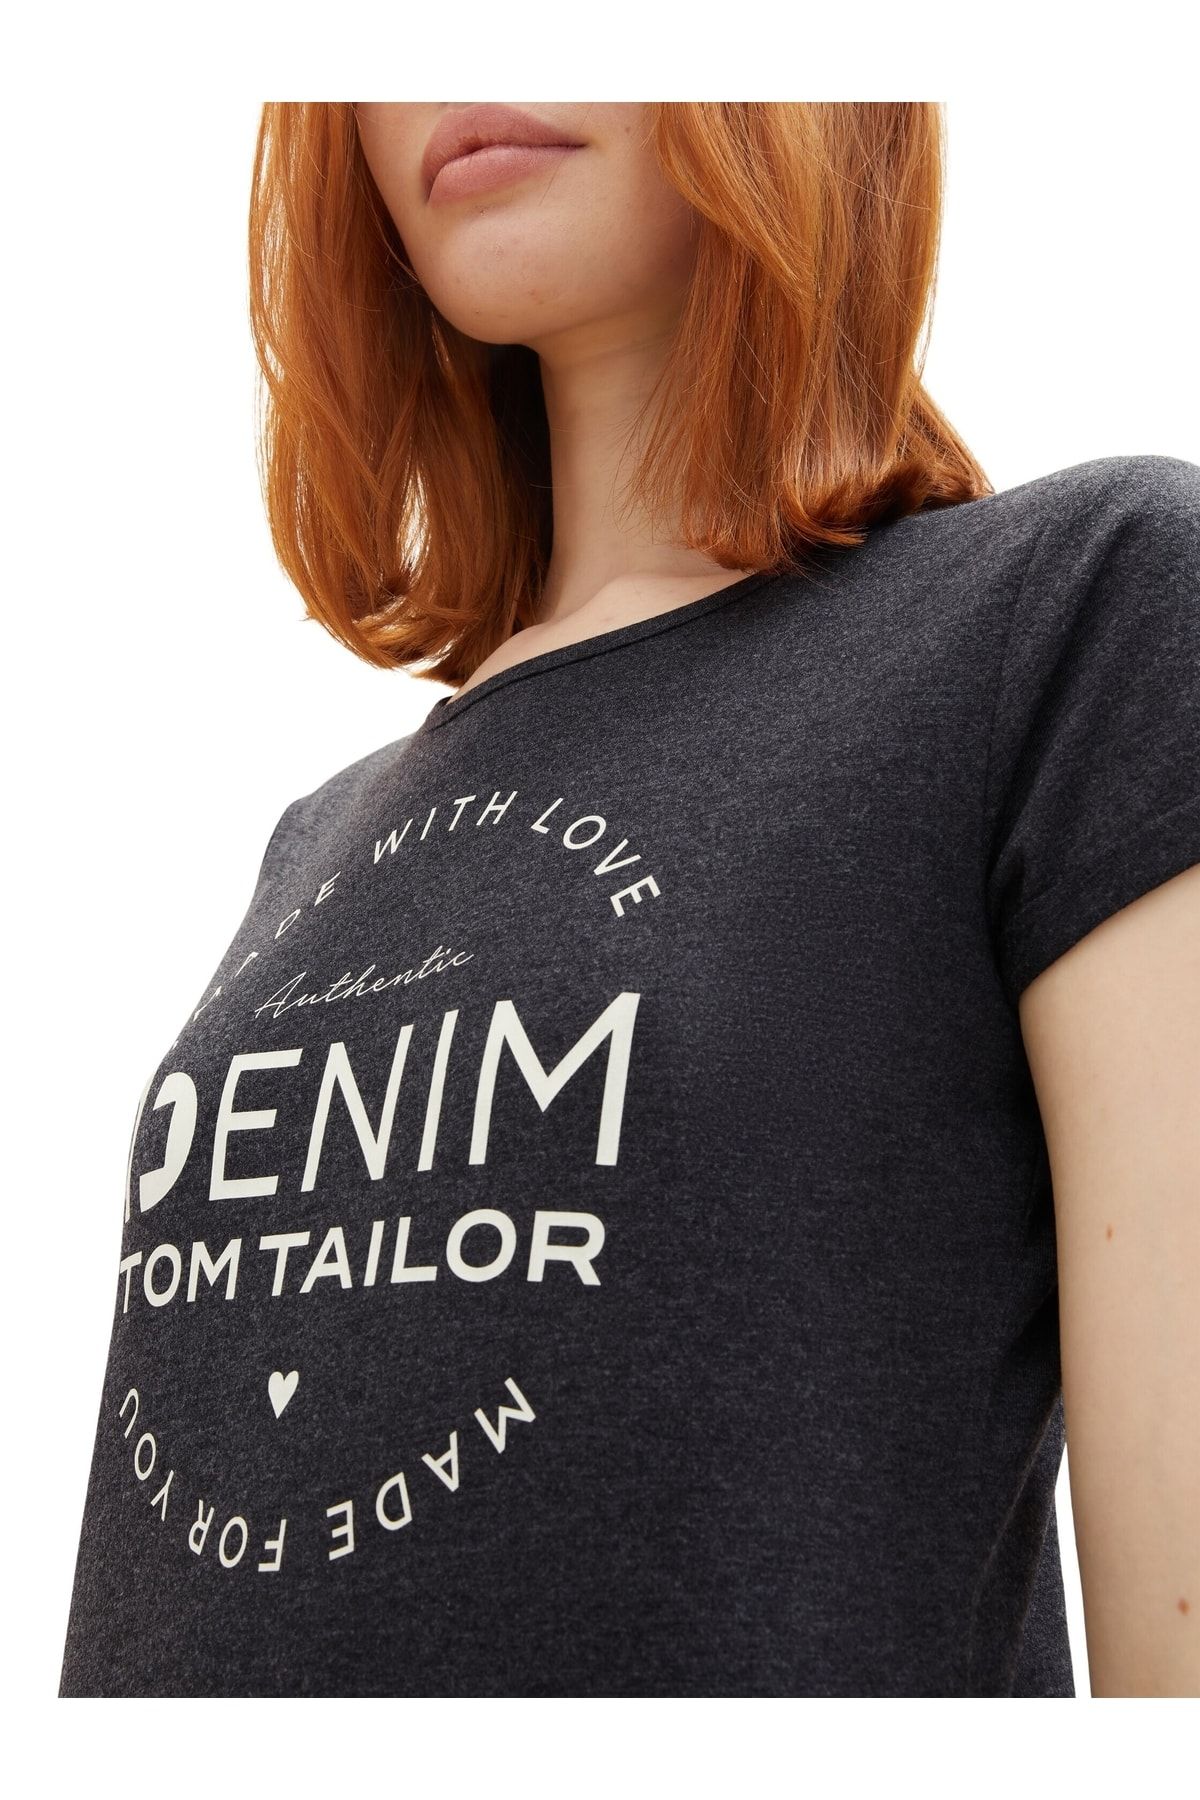 Tom Tailor Denim Black - T-Shirt - Trendyol - Regular fit